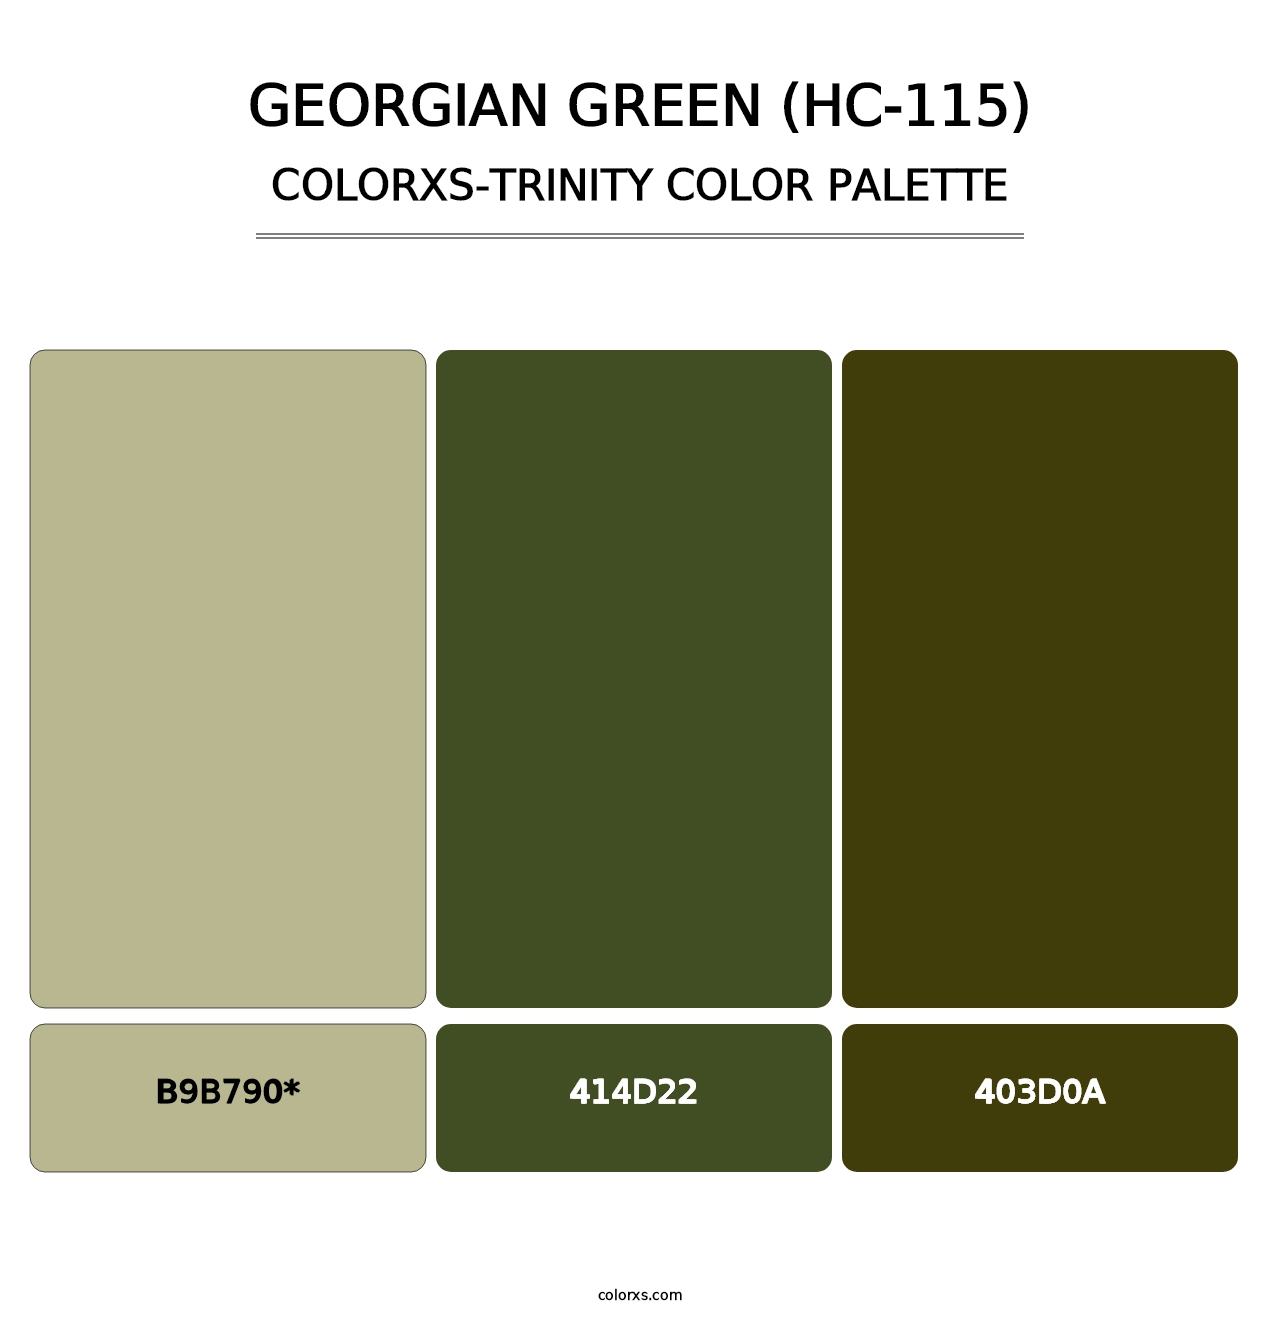 Georgian Green (HC-115) - Colorxs Trinity Palette